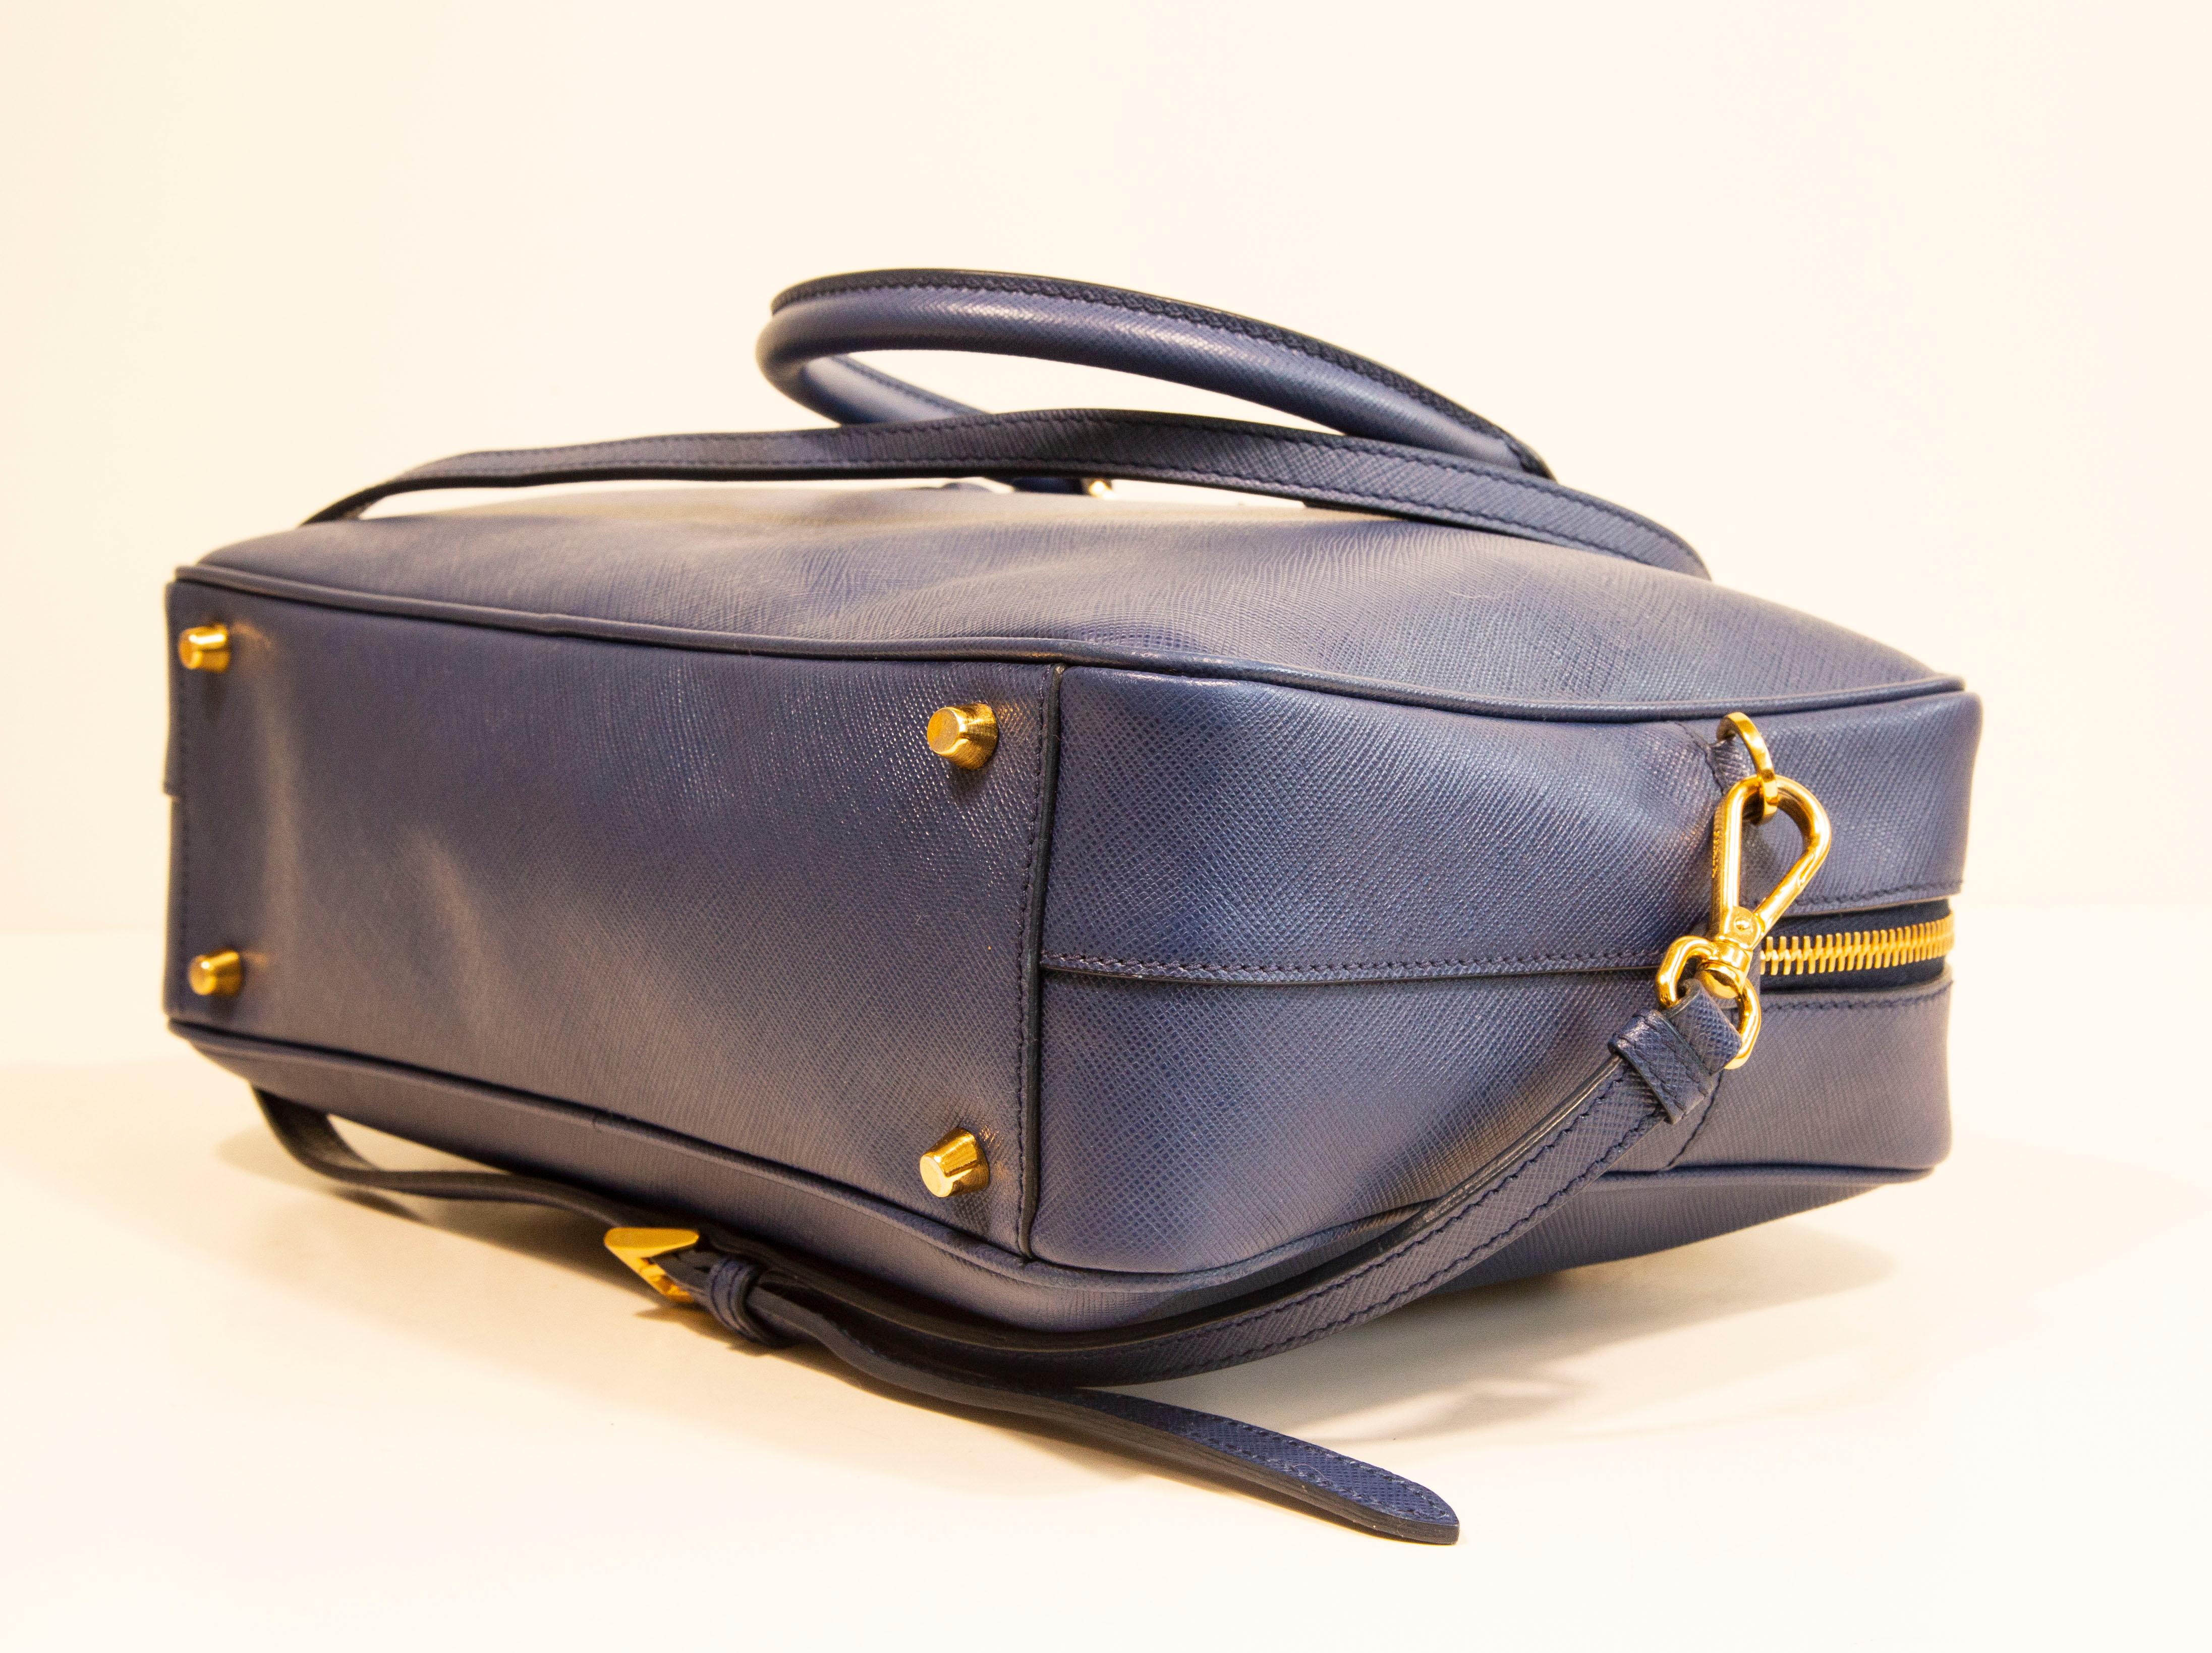  Prada Galleria Two Way Bag in Blue Saffiano Leather 8